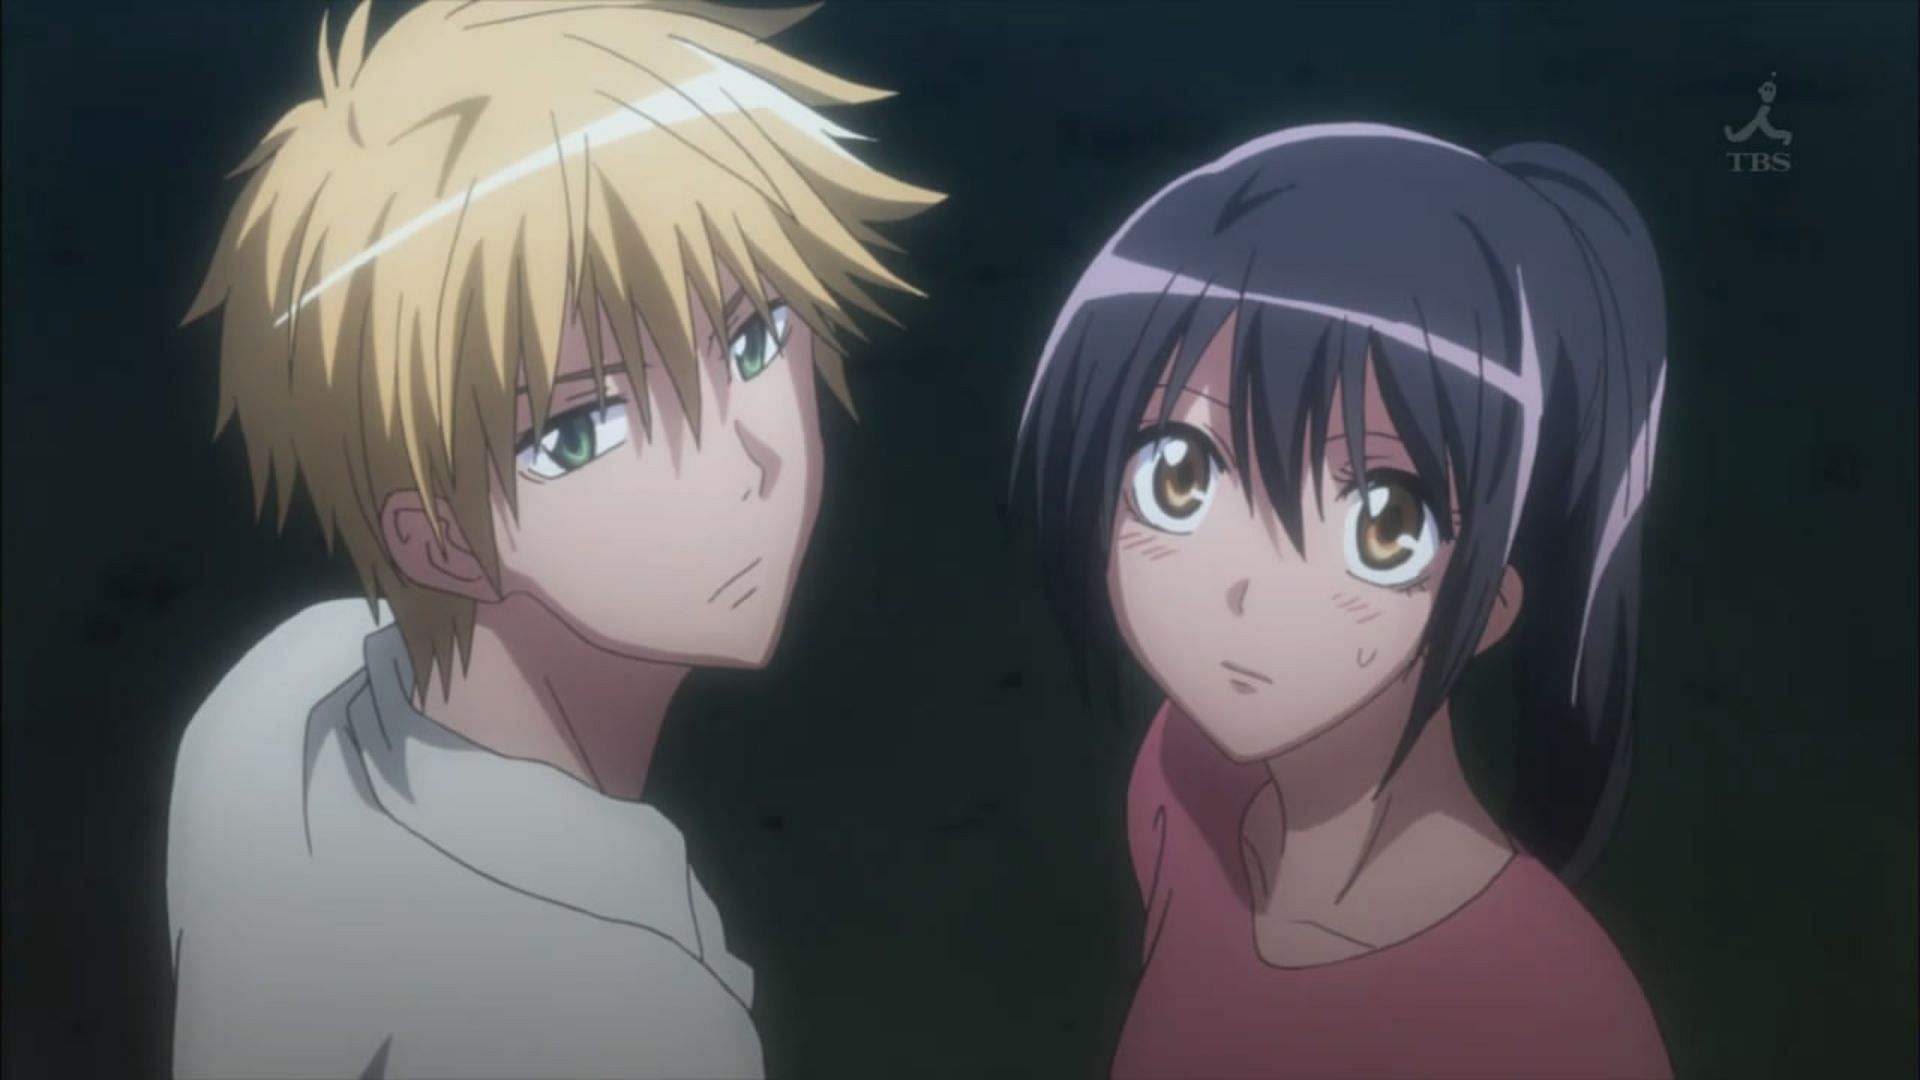 Misaki and Takumi as shown in anime (Image via Studio J.C.Staff)